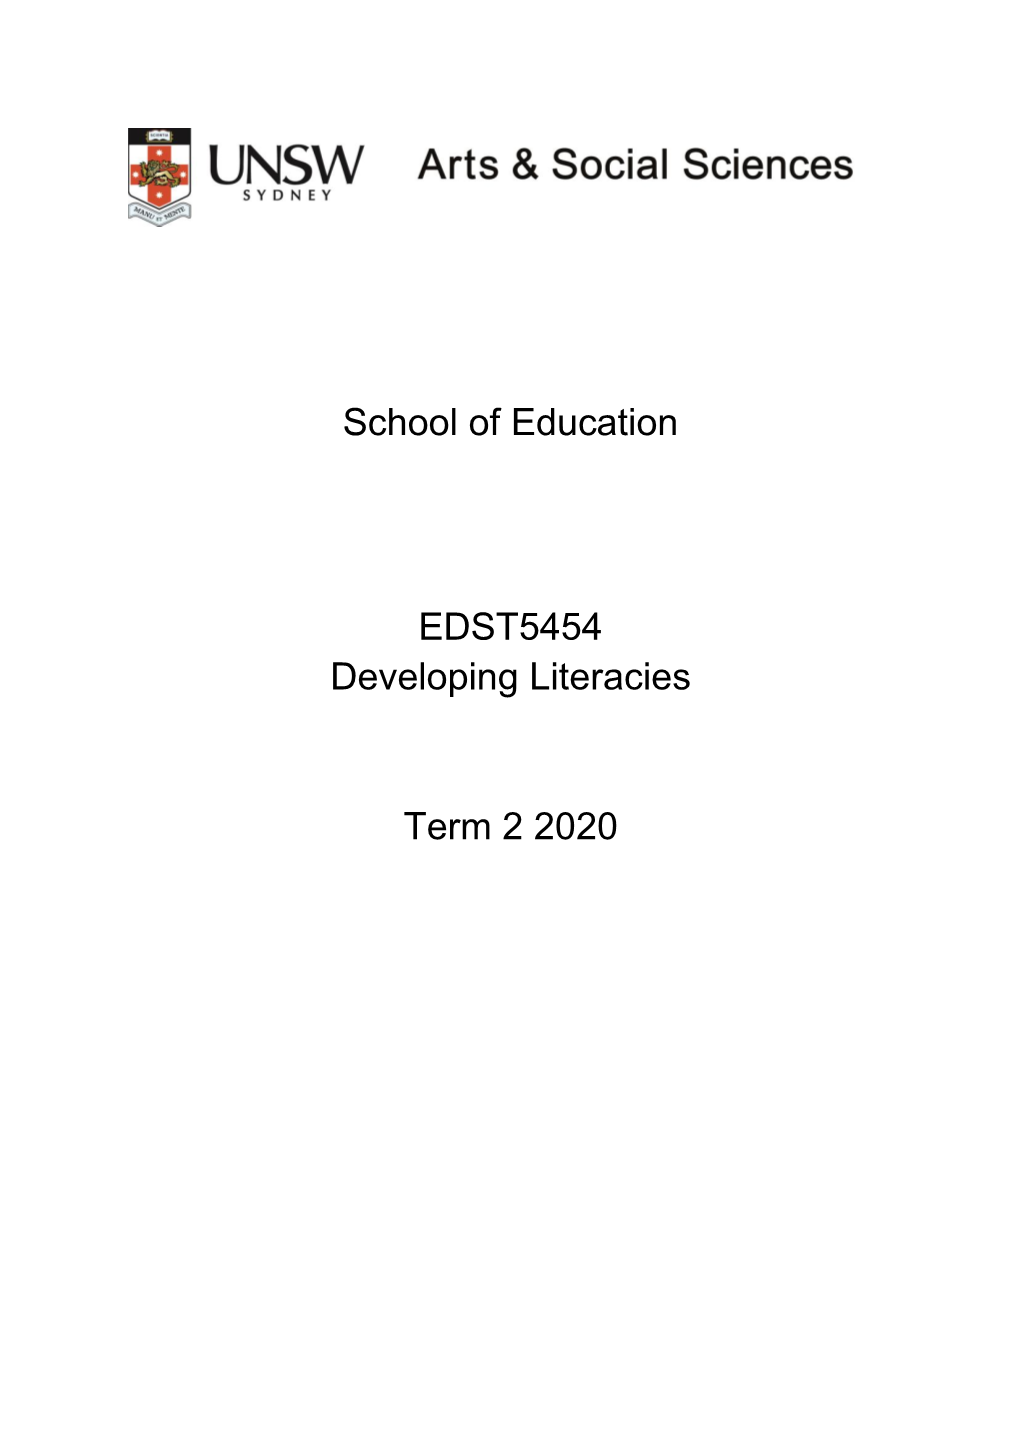 School of Education EDST5454 Developing Literacies Term 2 2020